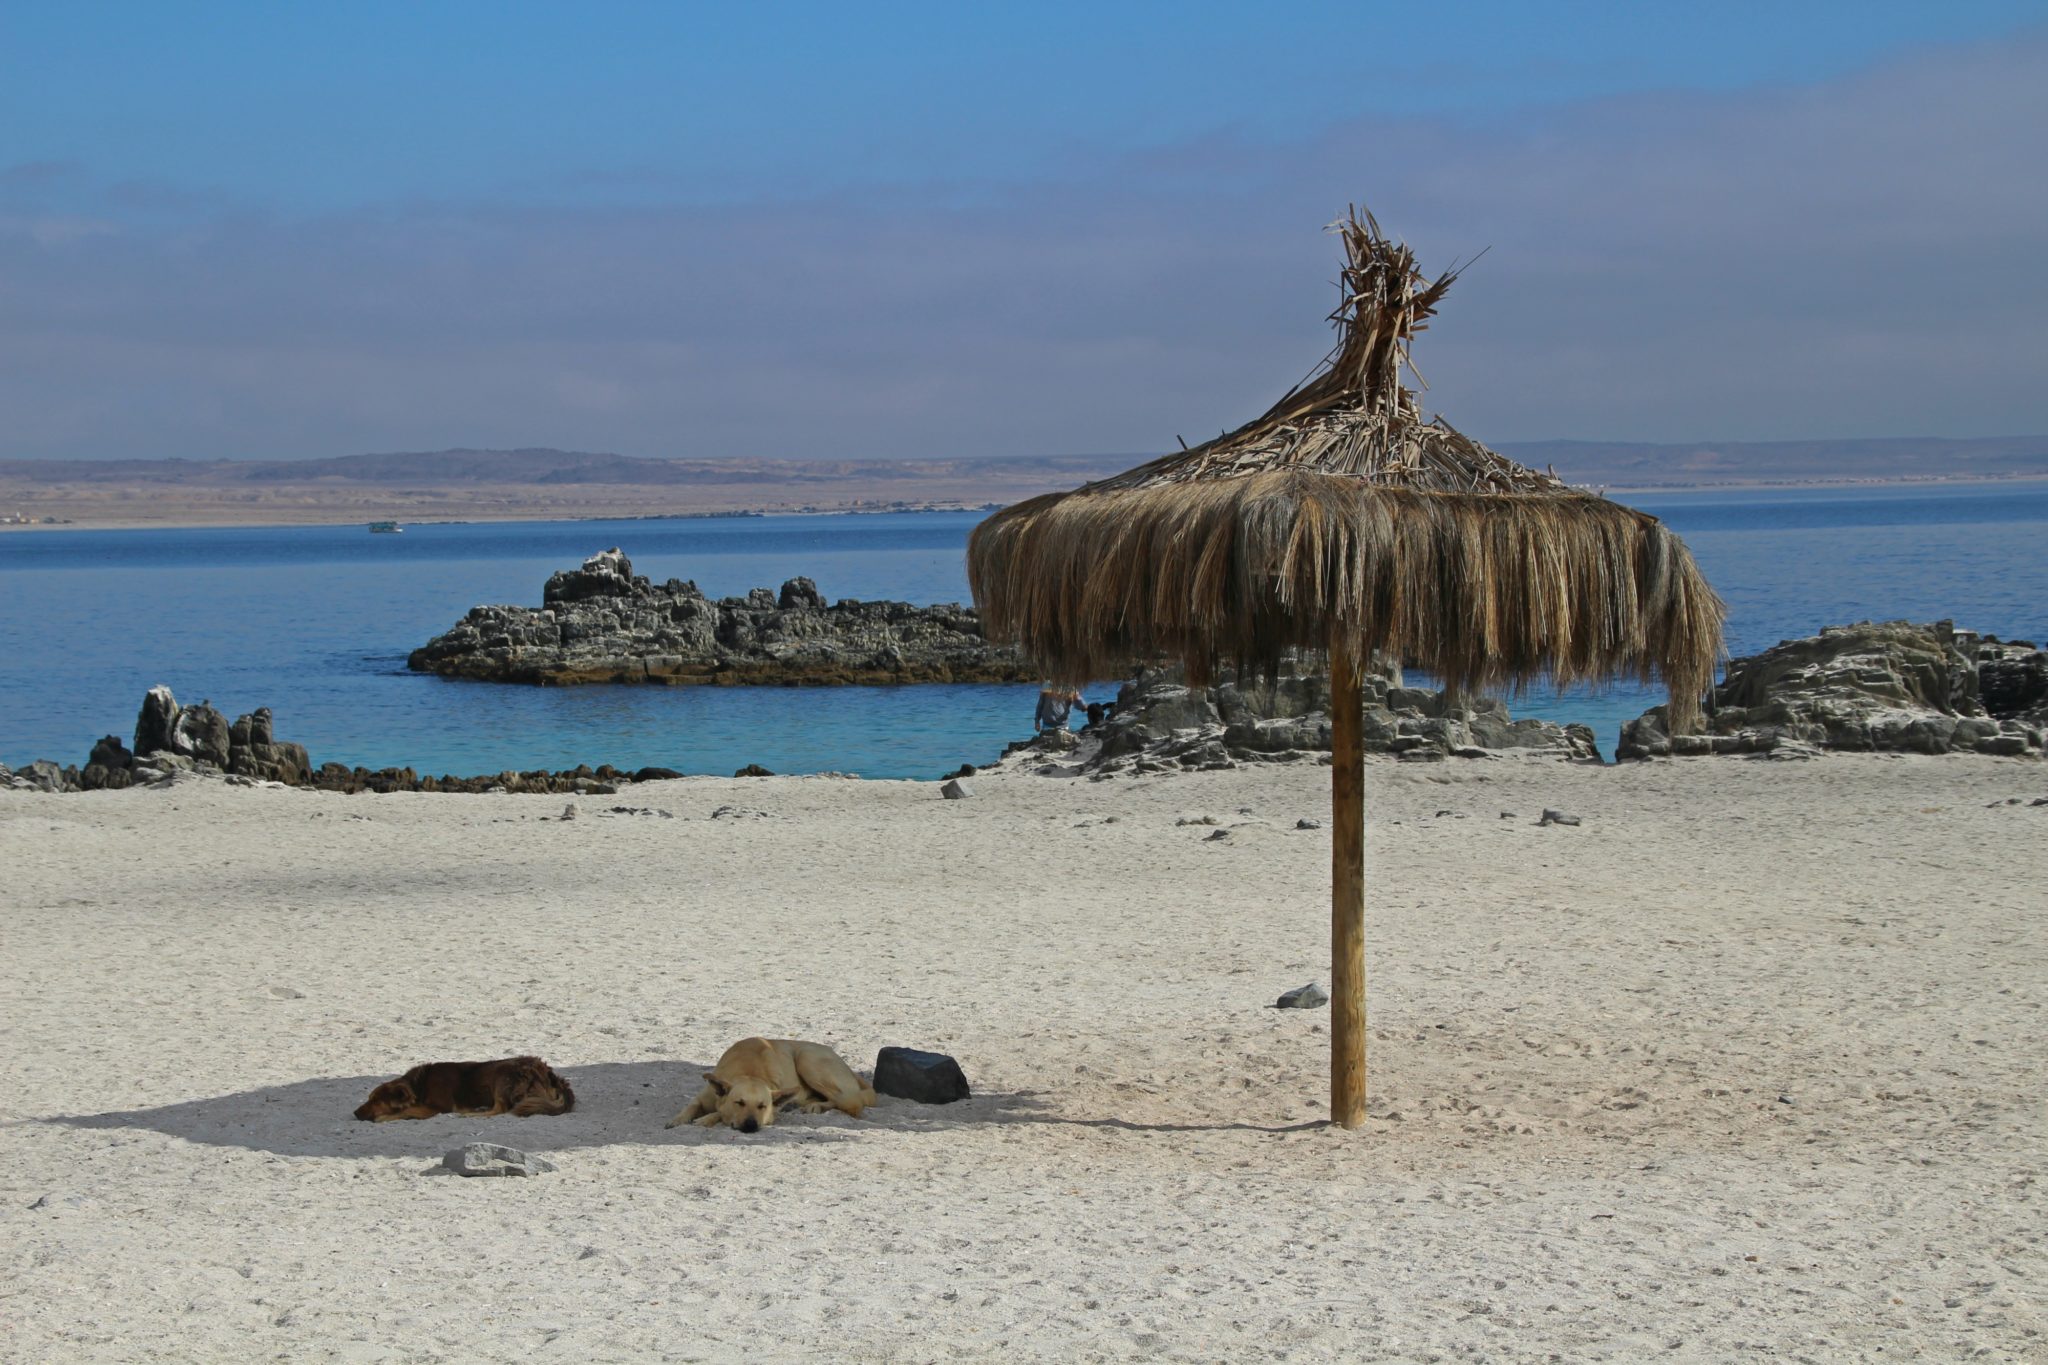 Bahia Inglesa Pan de Azucar Chili plage sable blanc mer turquoise chien